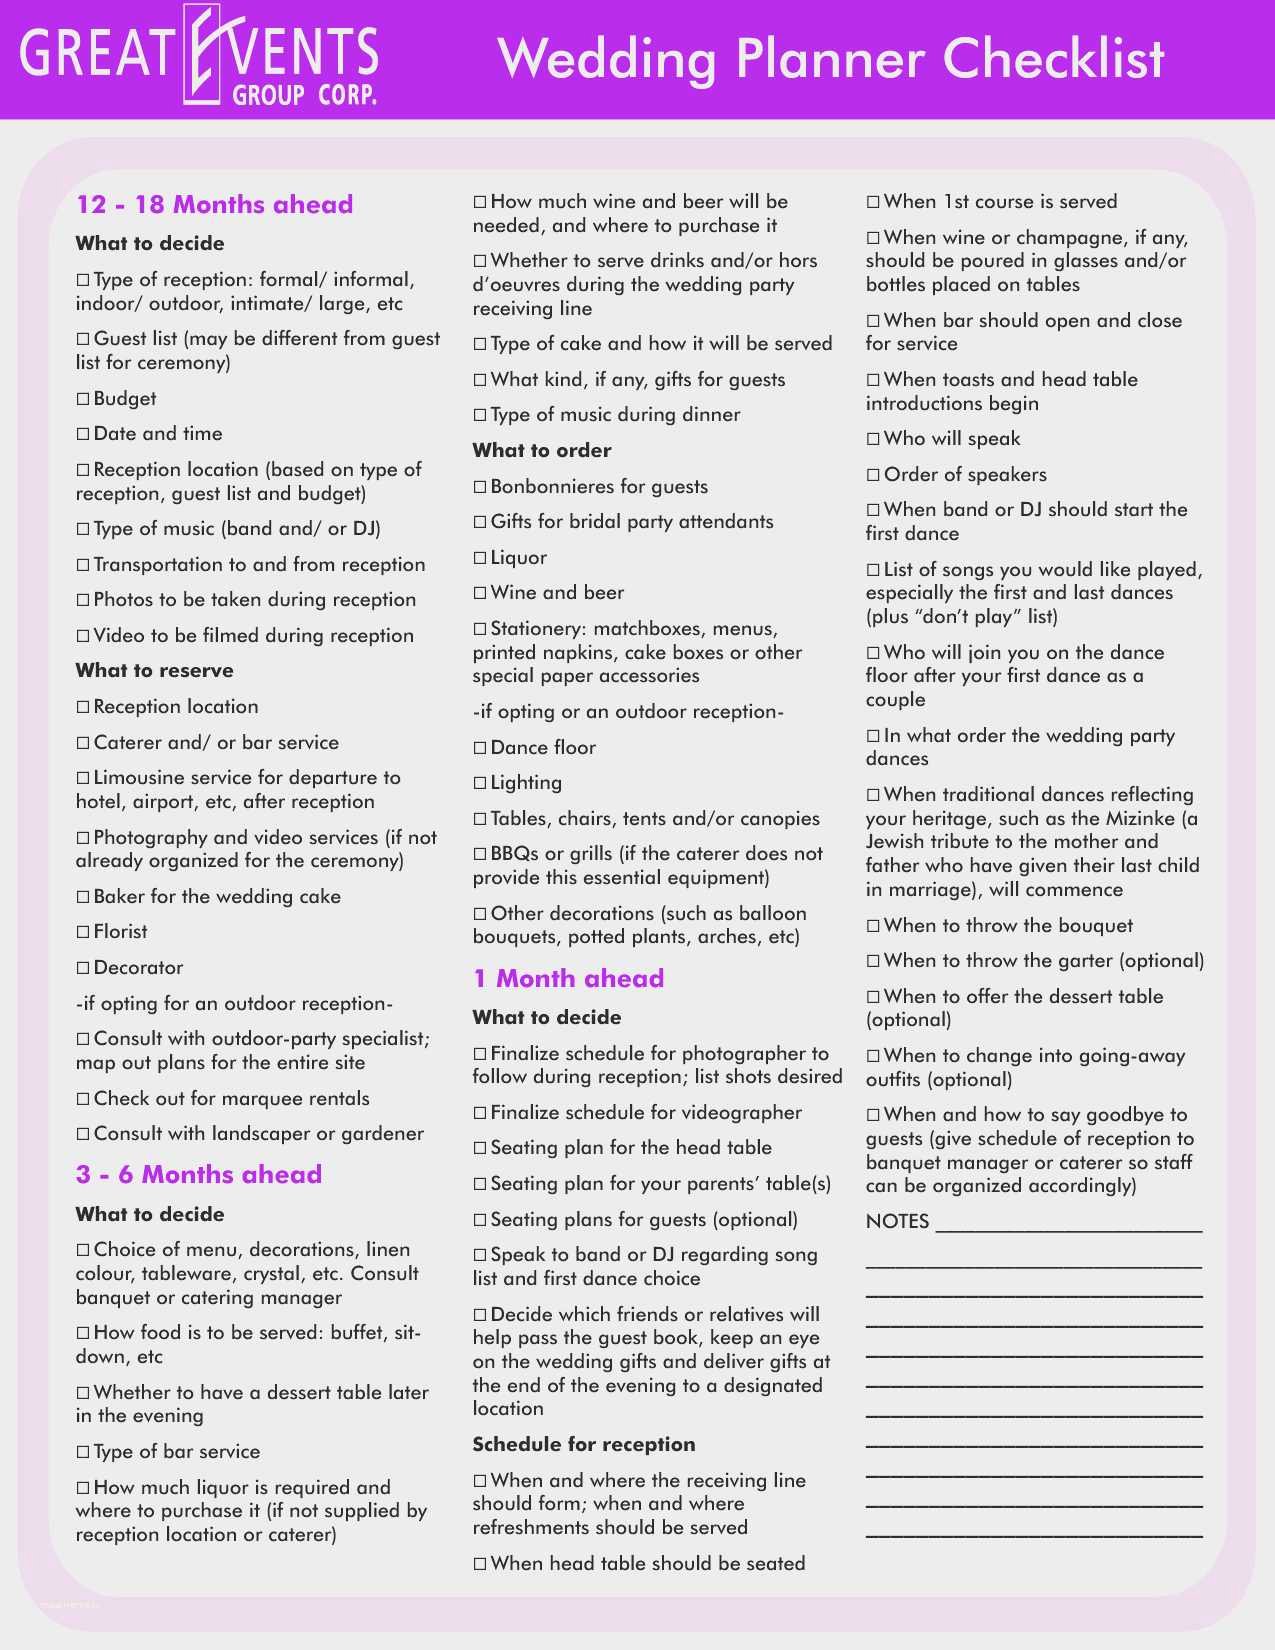 Wedding Day Checklist Printable Best Of Wedding Day Checklist Printable Awesome Wedding Planning